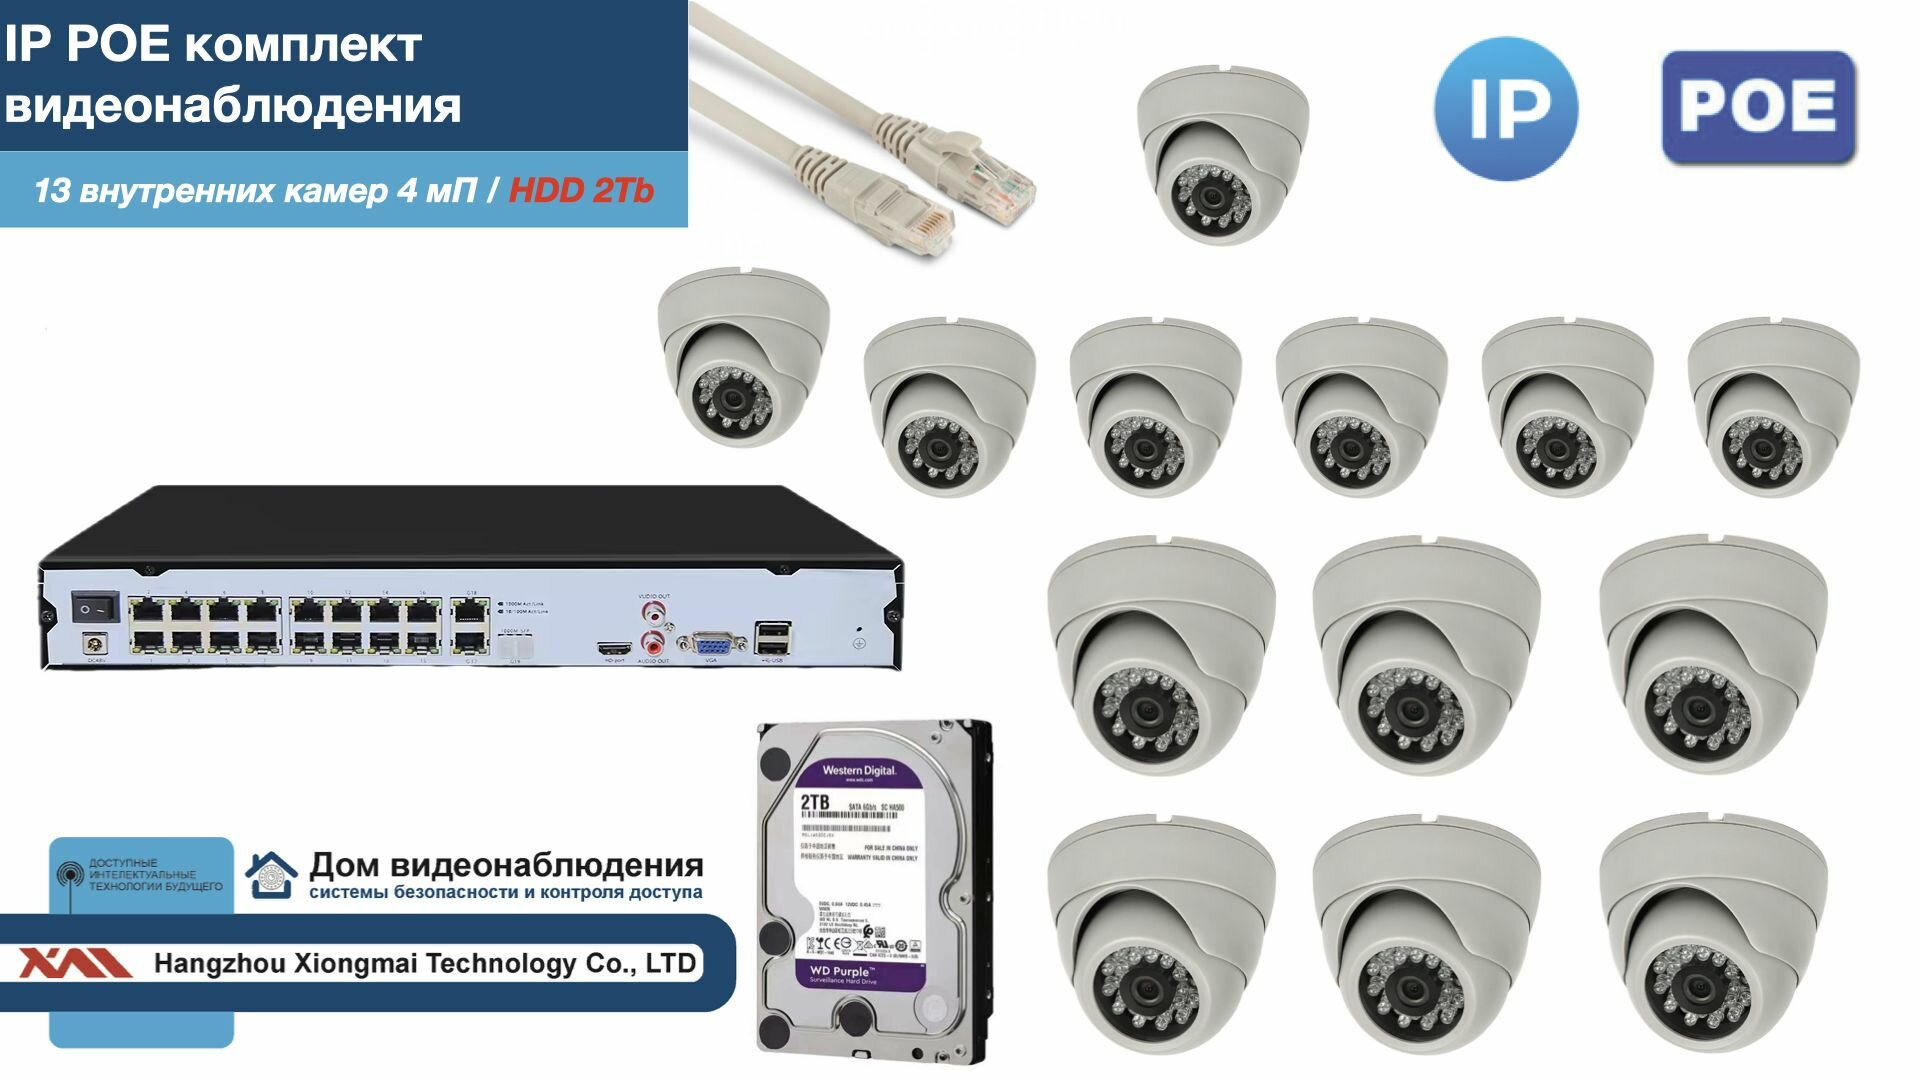 Полный IP POE комплект видеонаблюдения на 13 камер (KIT13IPPOE300W4MP-2-HDD2Tb)